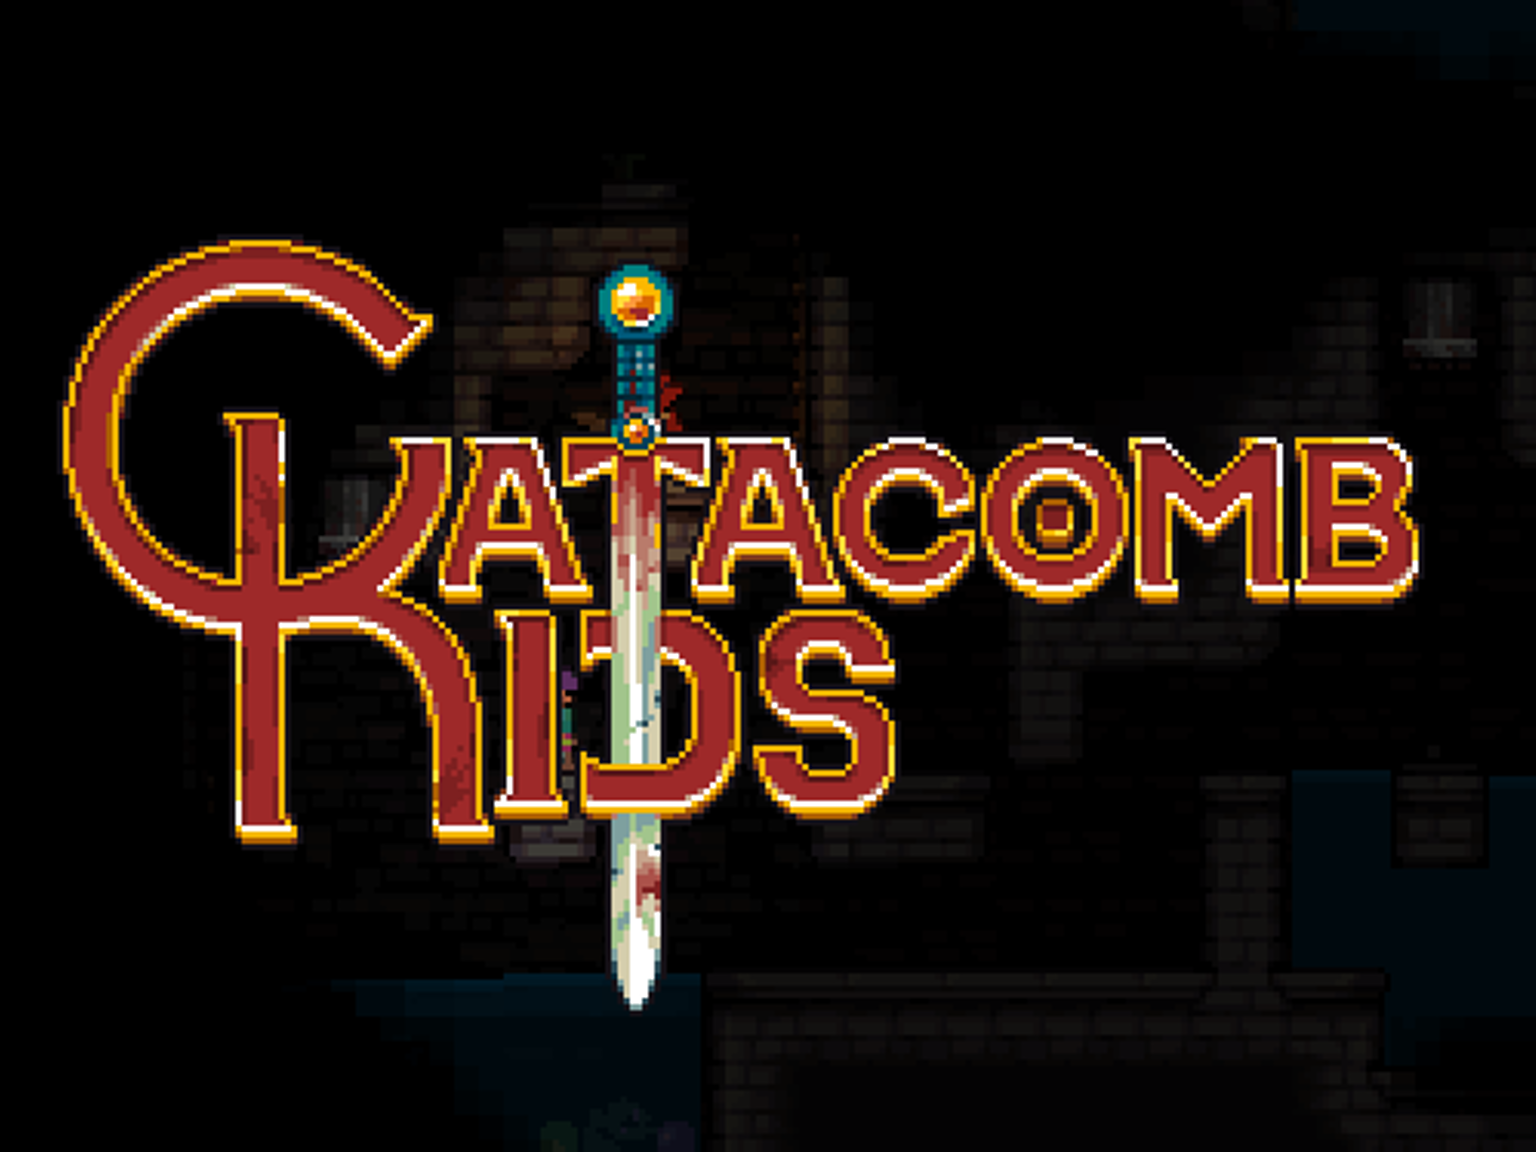 Catacomb Kids (0.2.1) free download